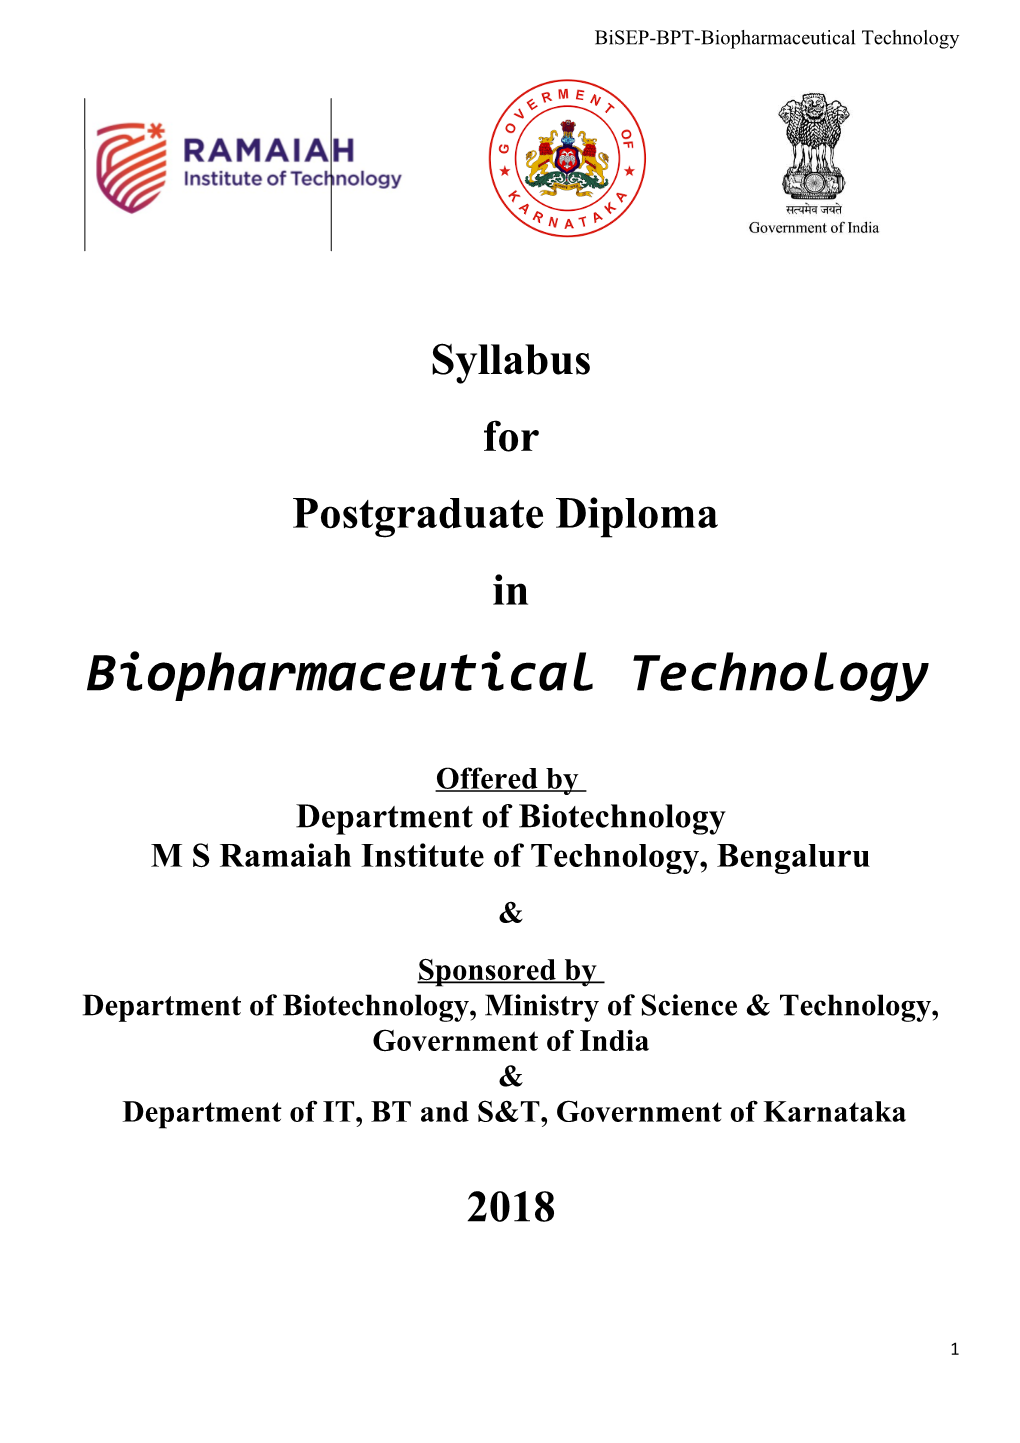 Bisep-BPT-Biopharmaceutical Technology